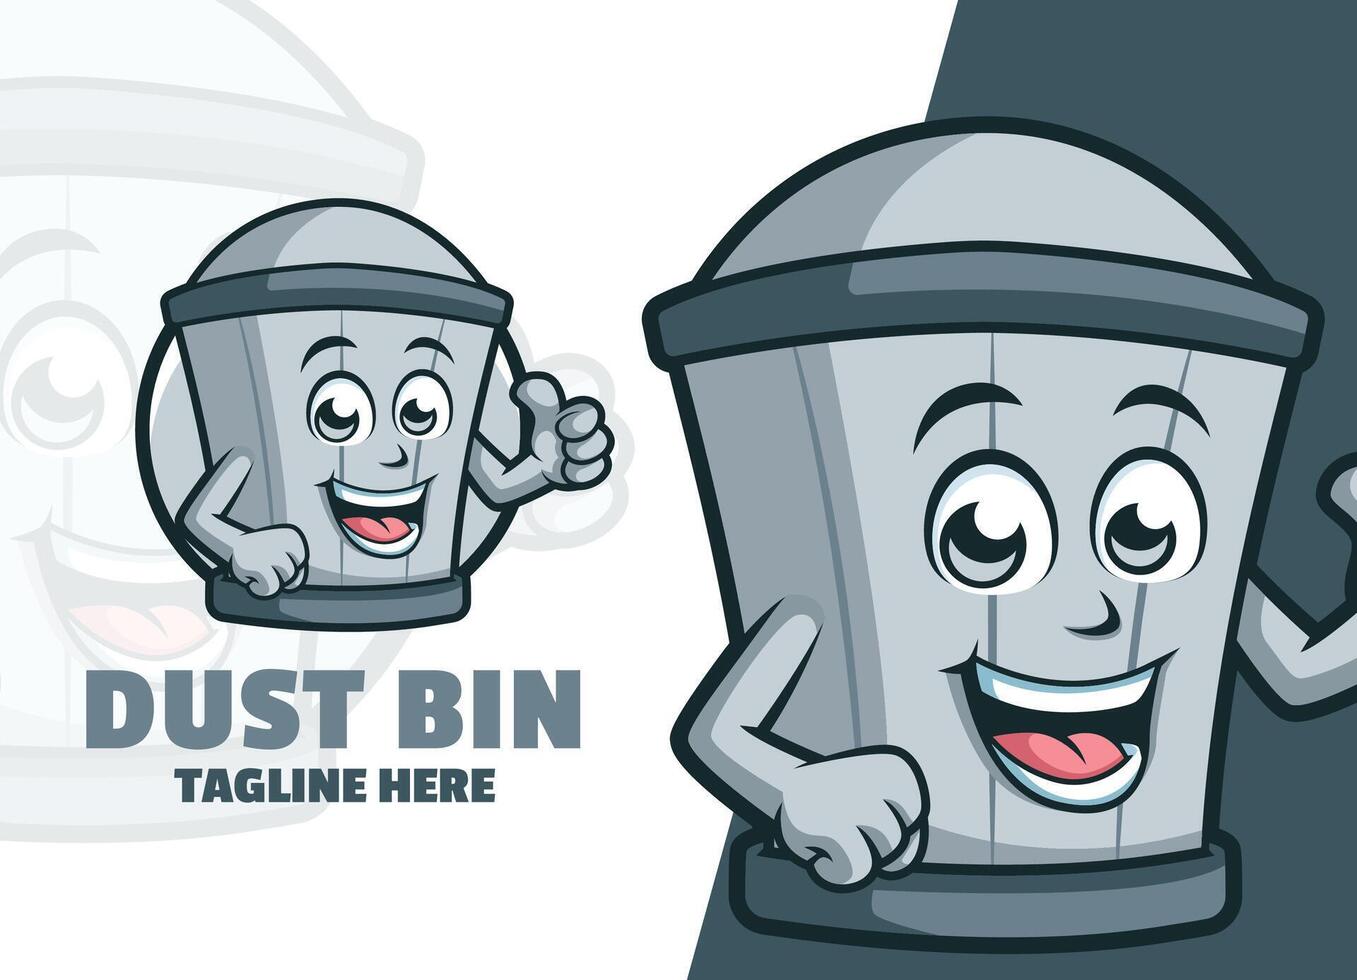 Cute Dustbin Cartoon character mascot logo Giving Thumb up vector illustration